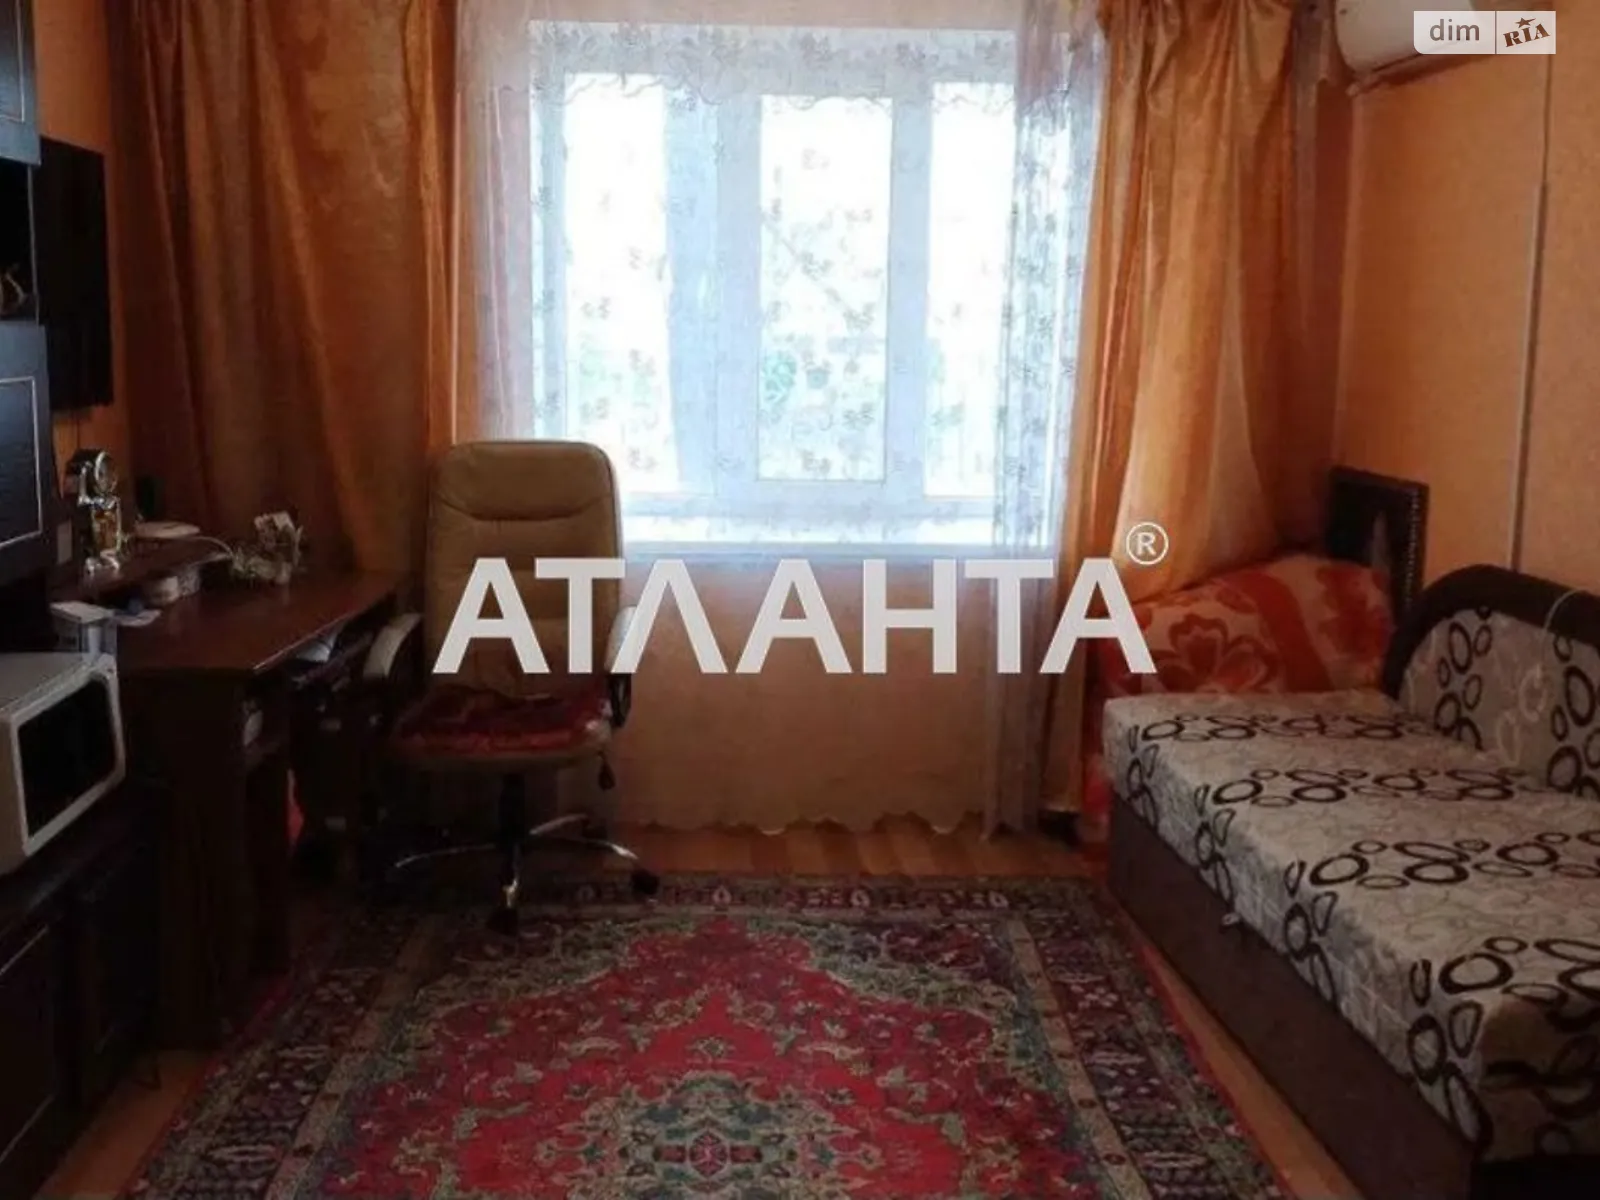 Продается комната 30 кв. м в Одессе, цена: 10000 $ - фото 1